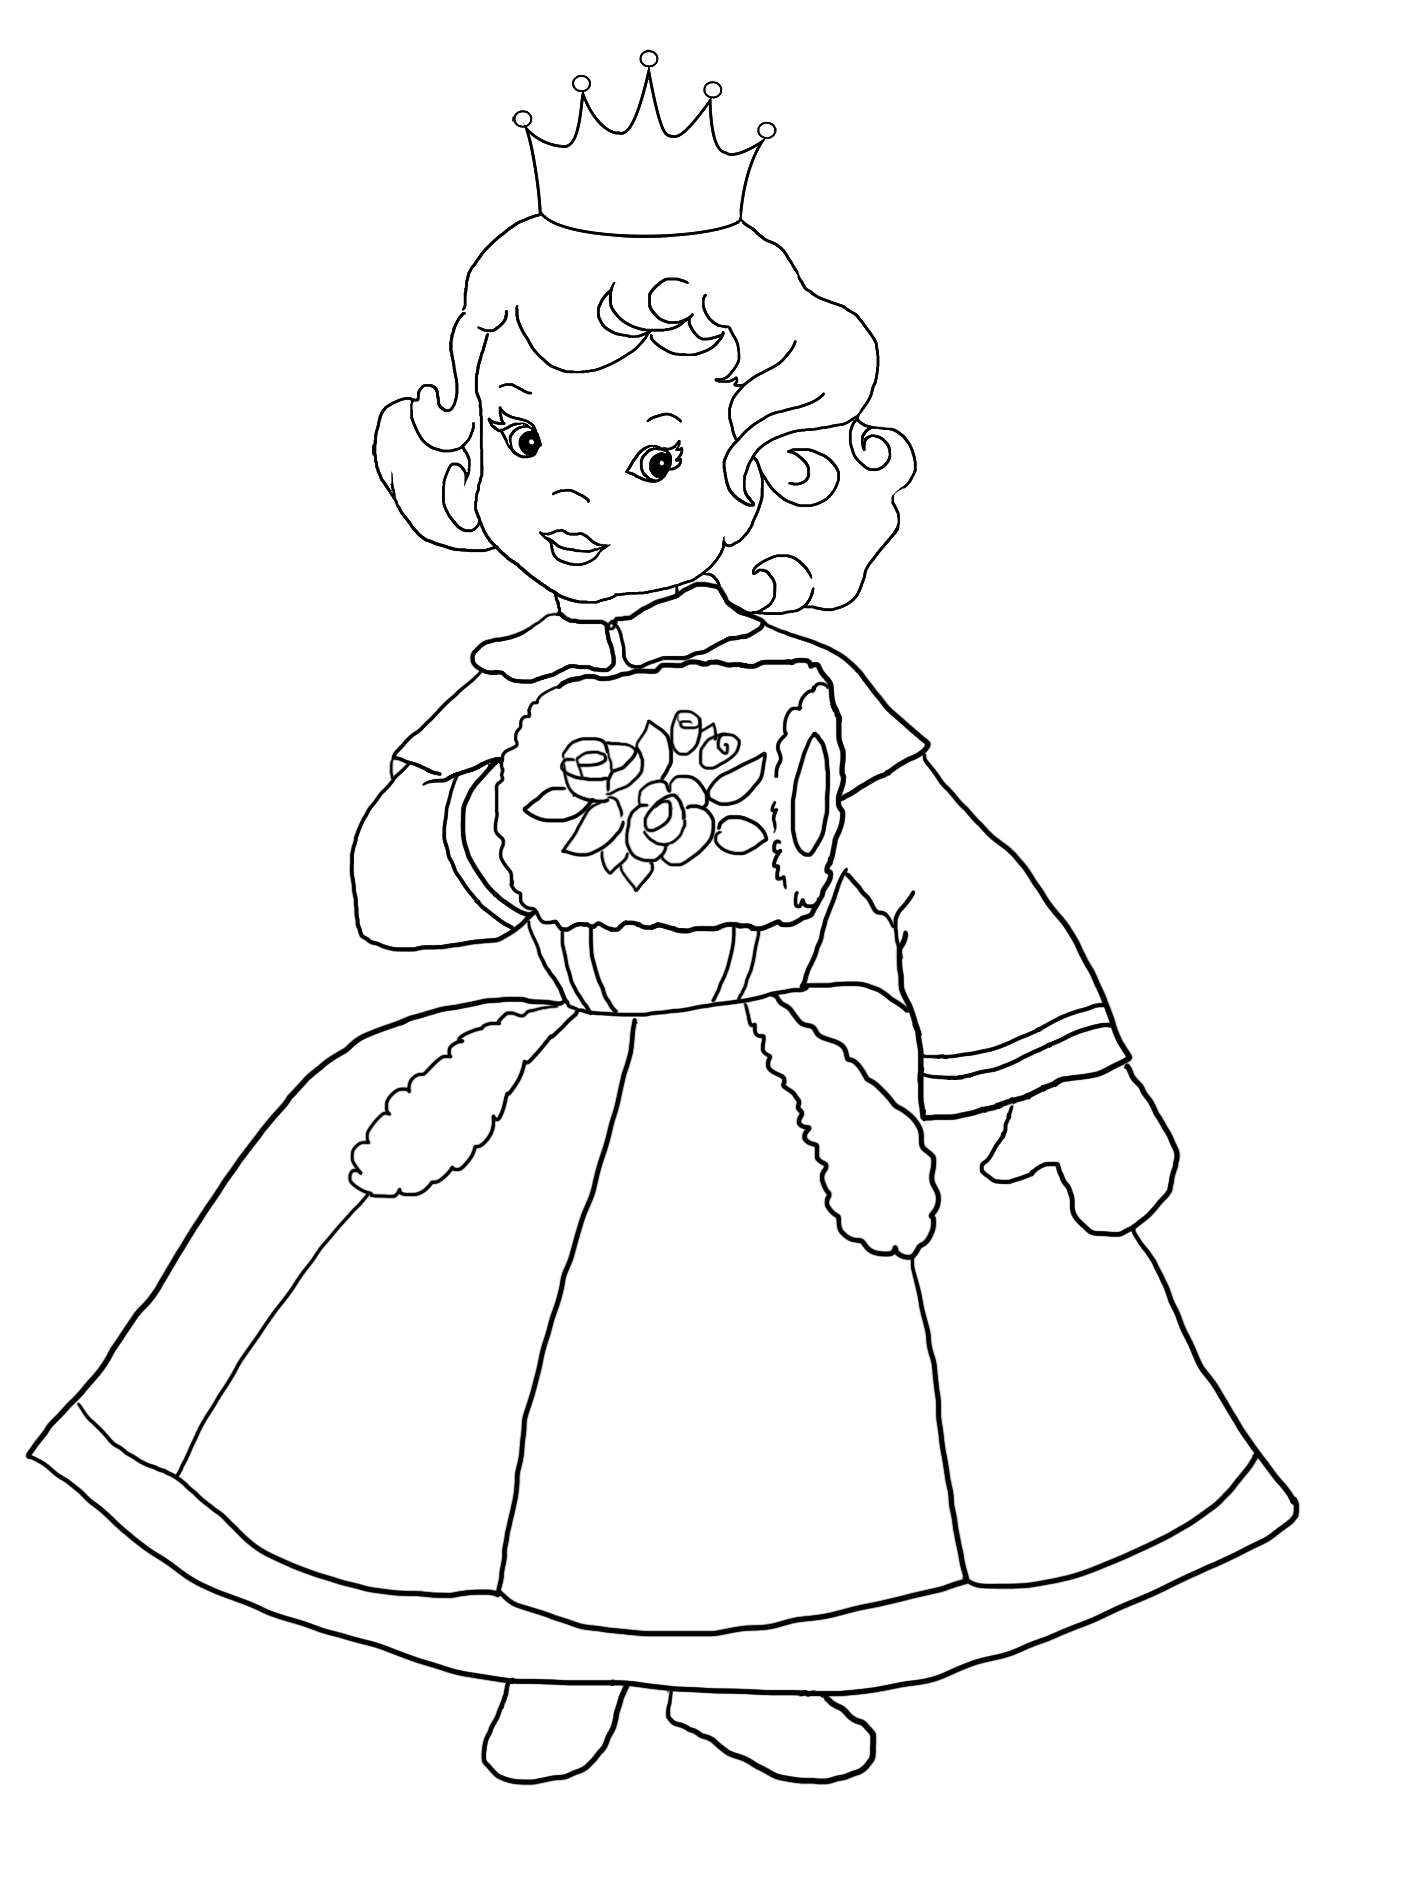 coloring sheet of princess in winter dress